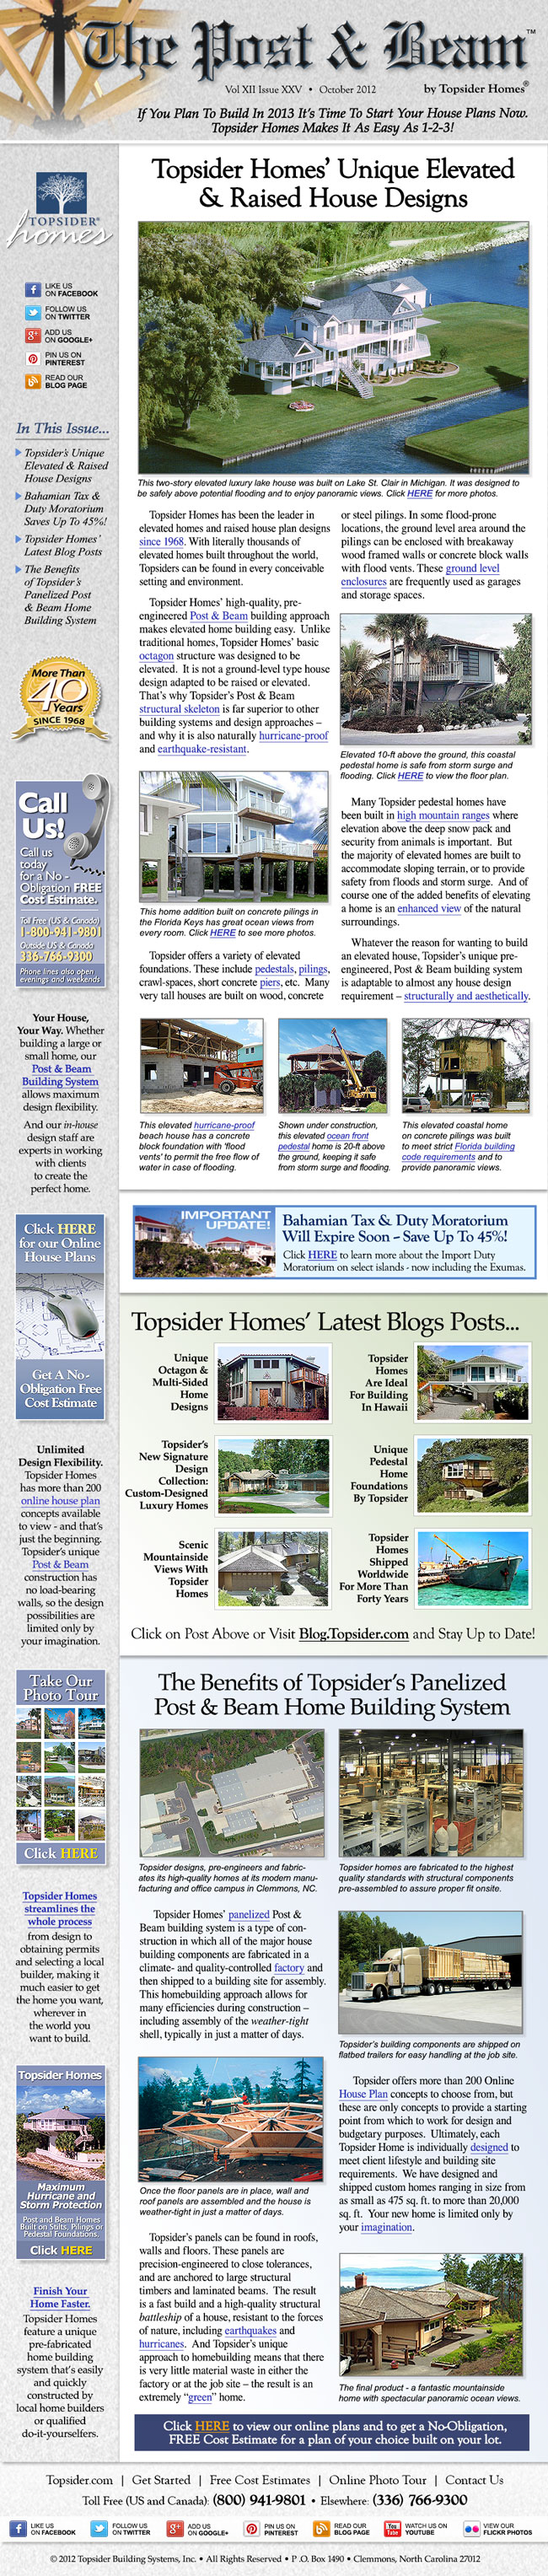 Topsider Homes October 2012 eNewsletter